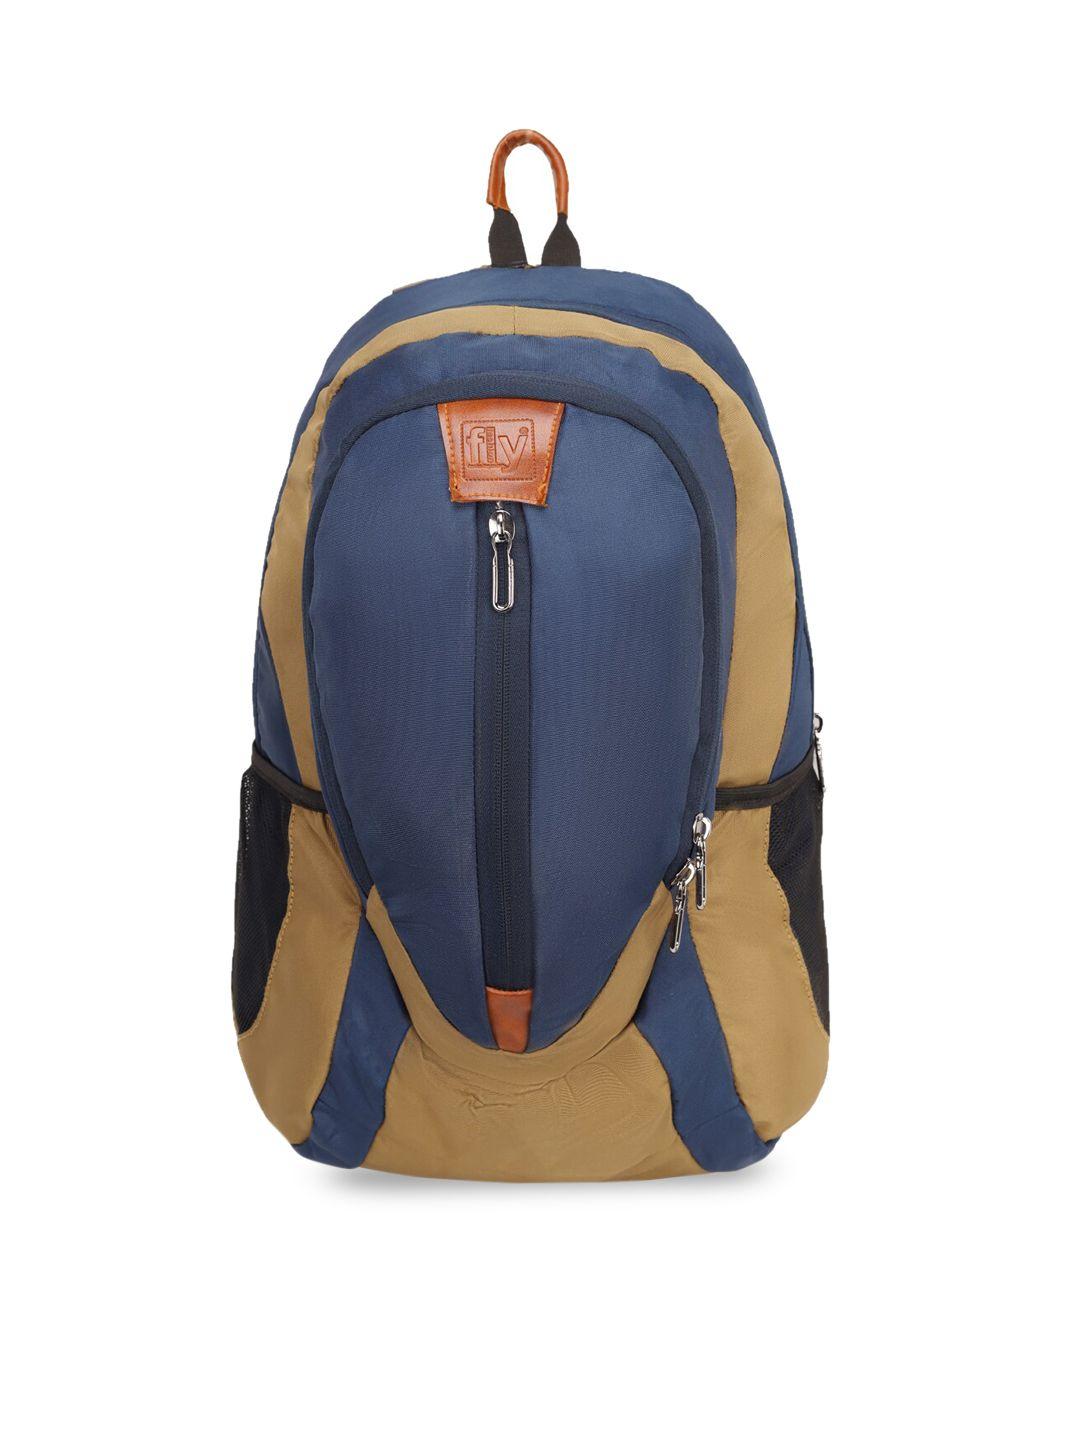 fly fashion unisex navy blue & mustard colourblocked backpack